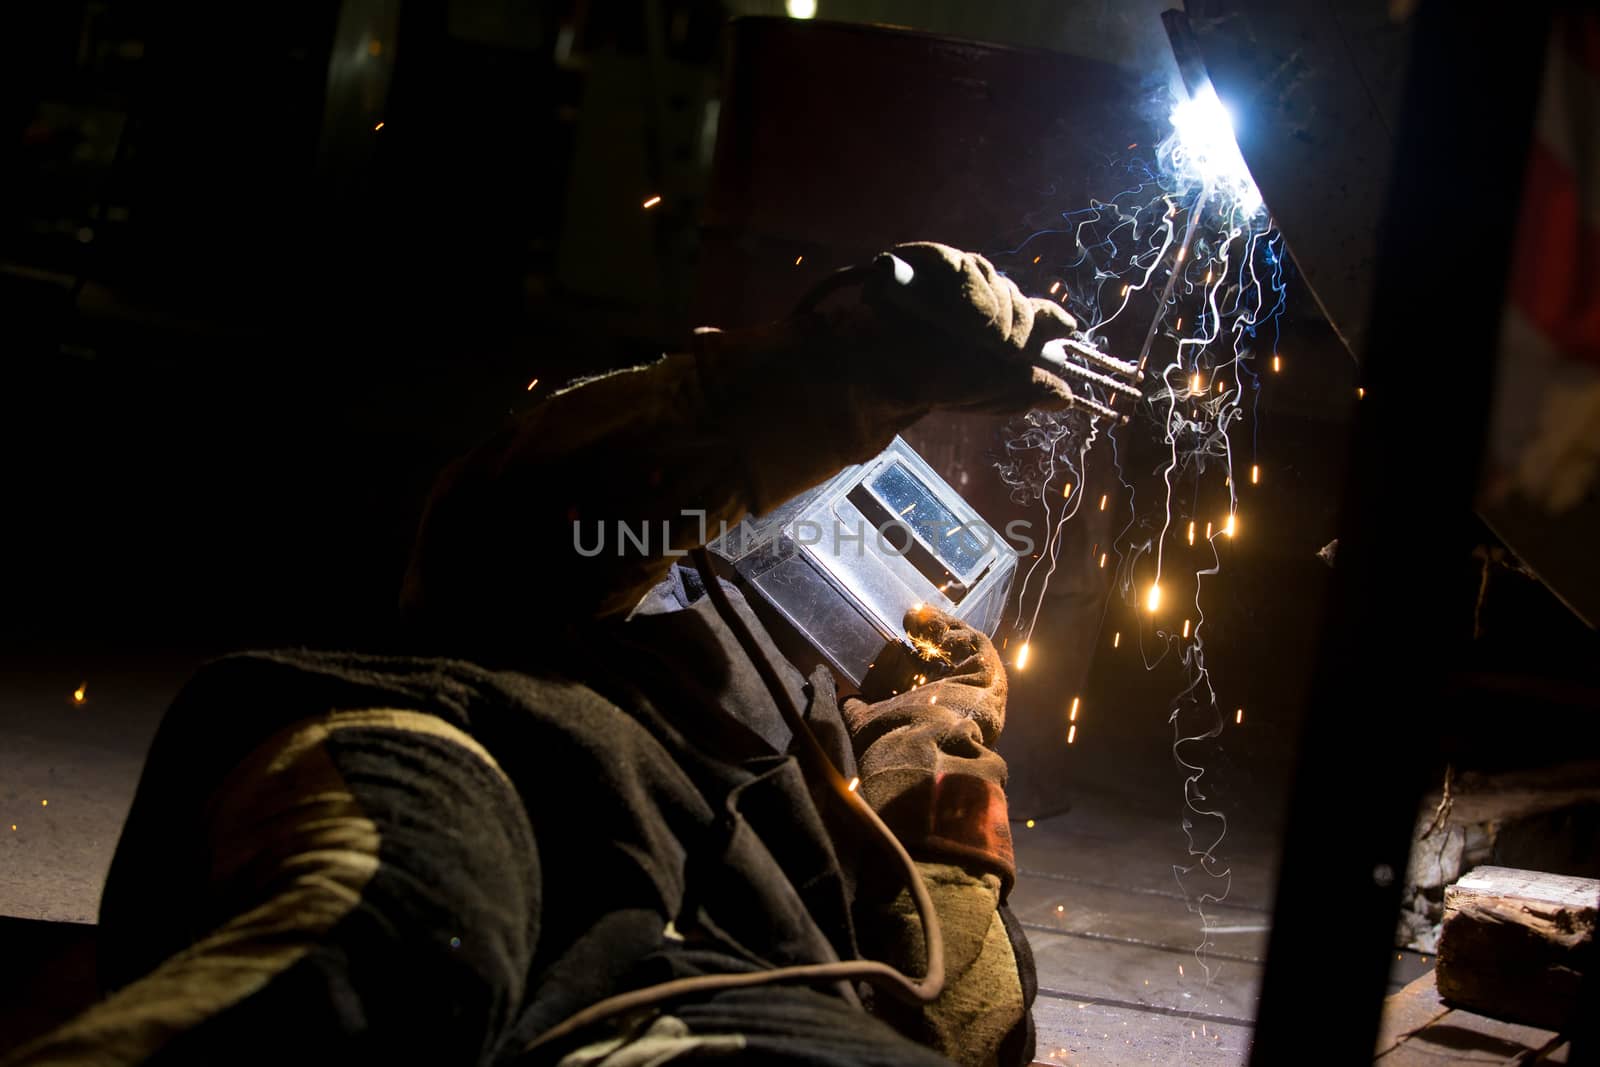 A welder is welding a metal pipe with electric welding.